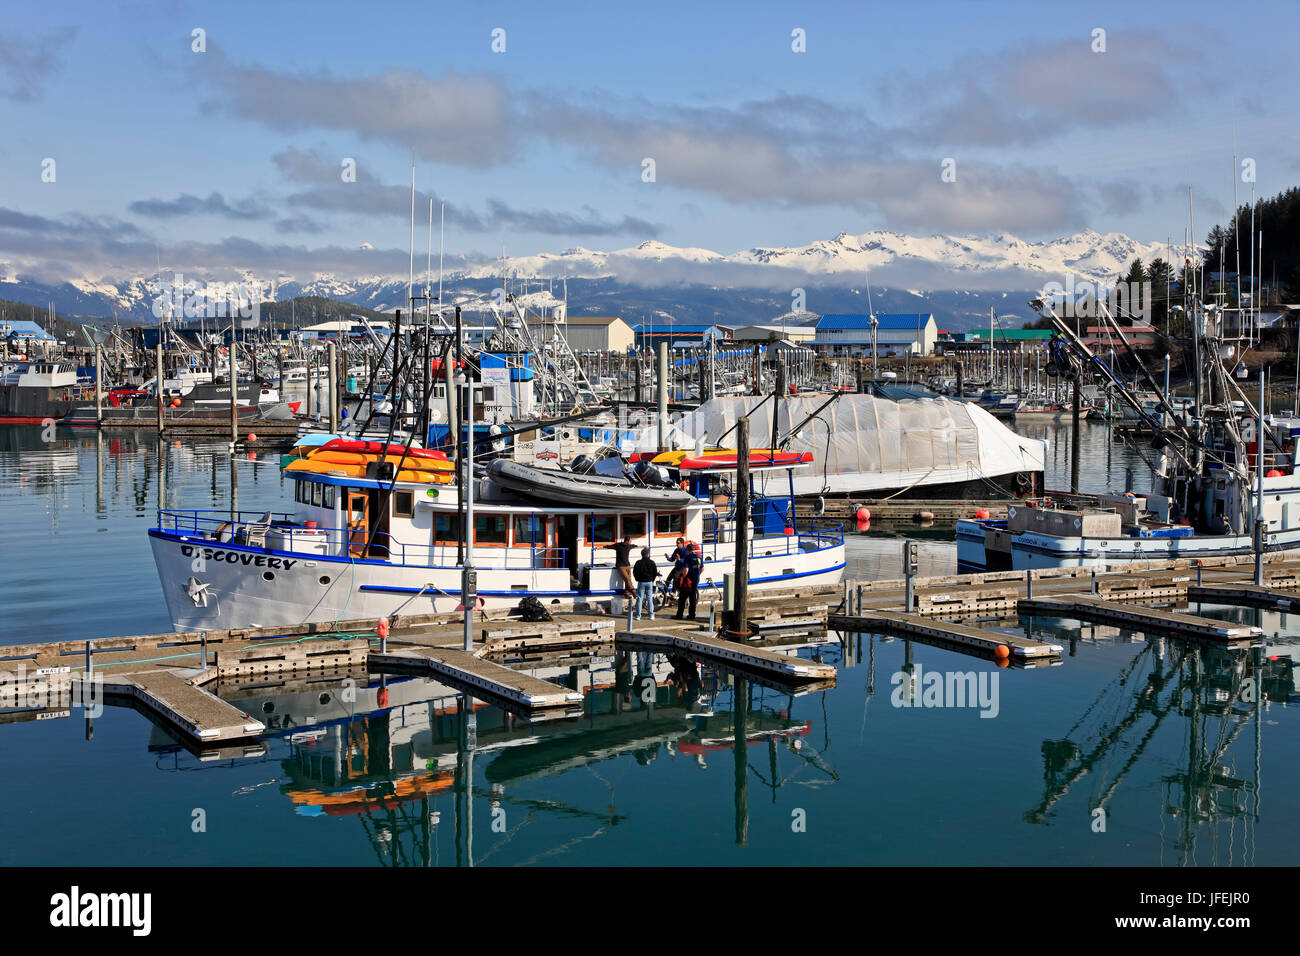 North America, the USA, Alaska, corduroy ova, harbour Stock Photo